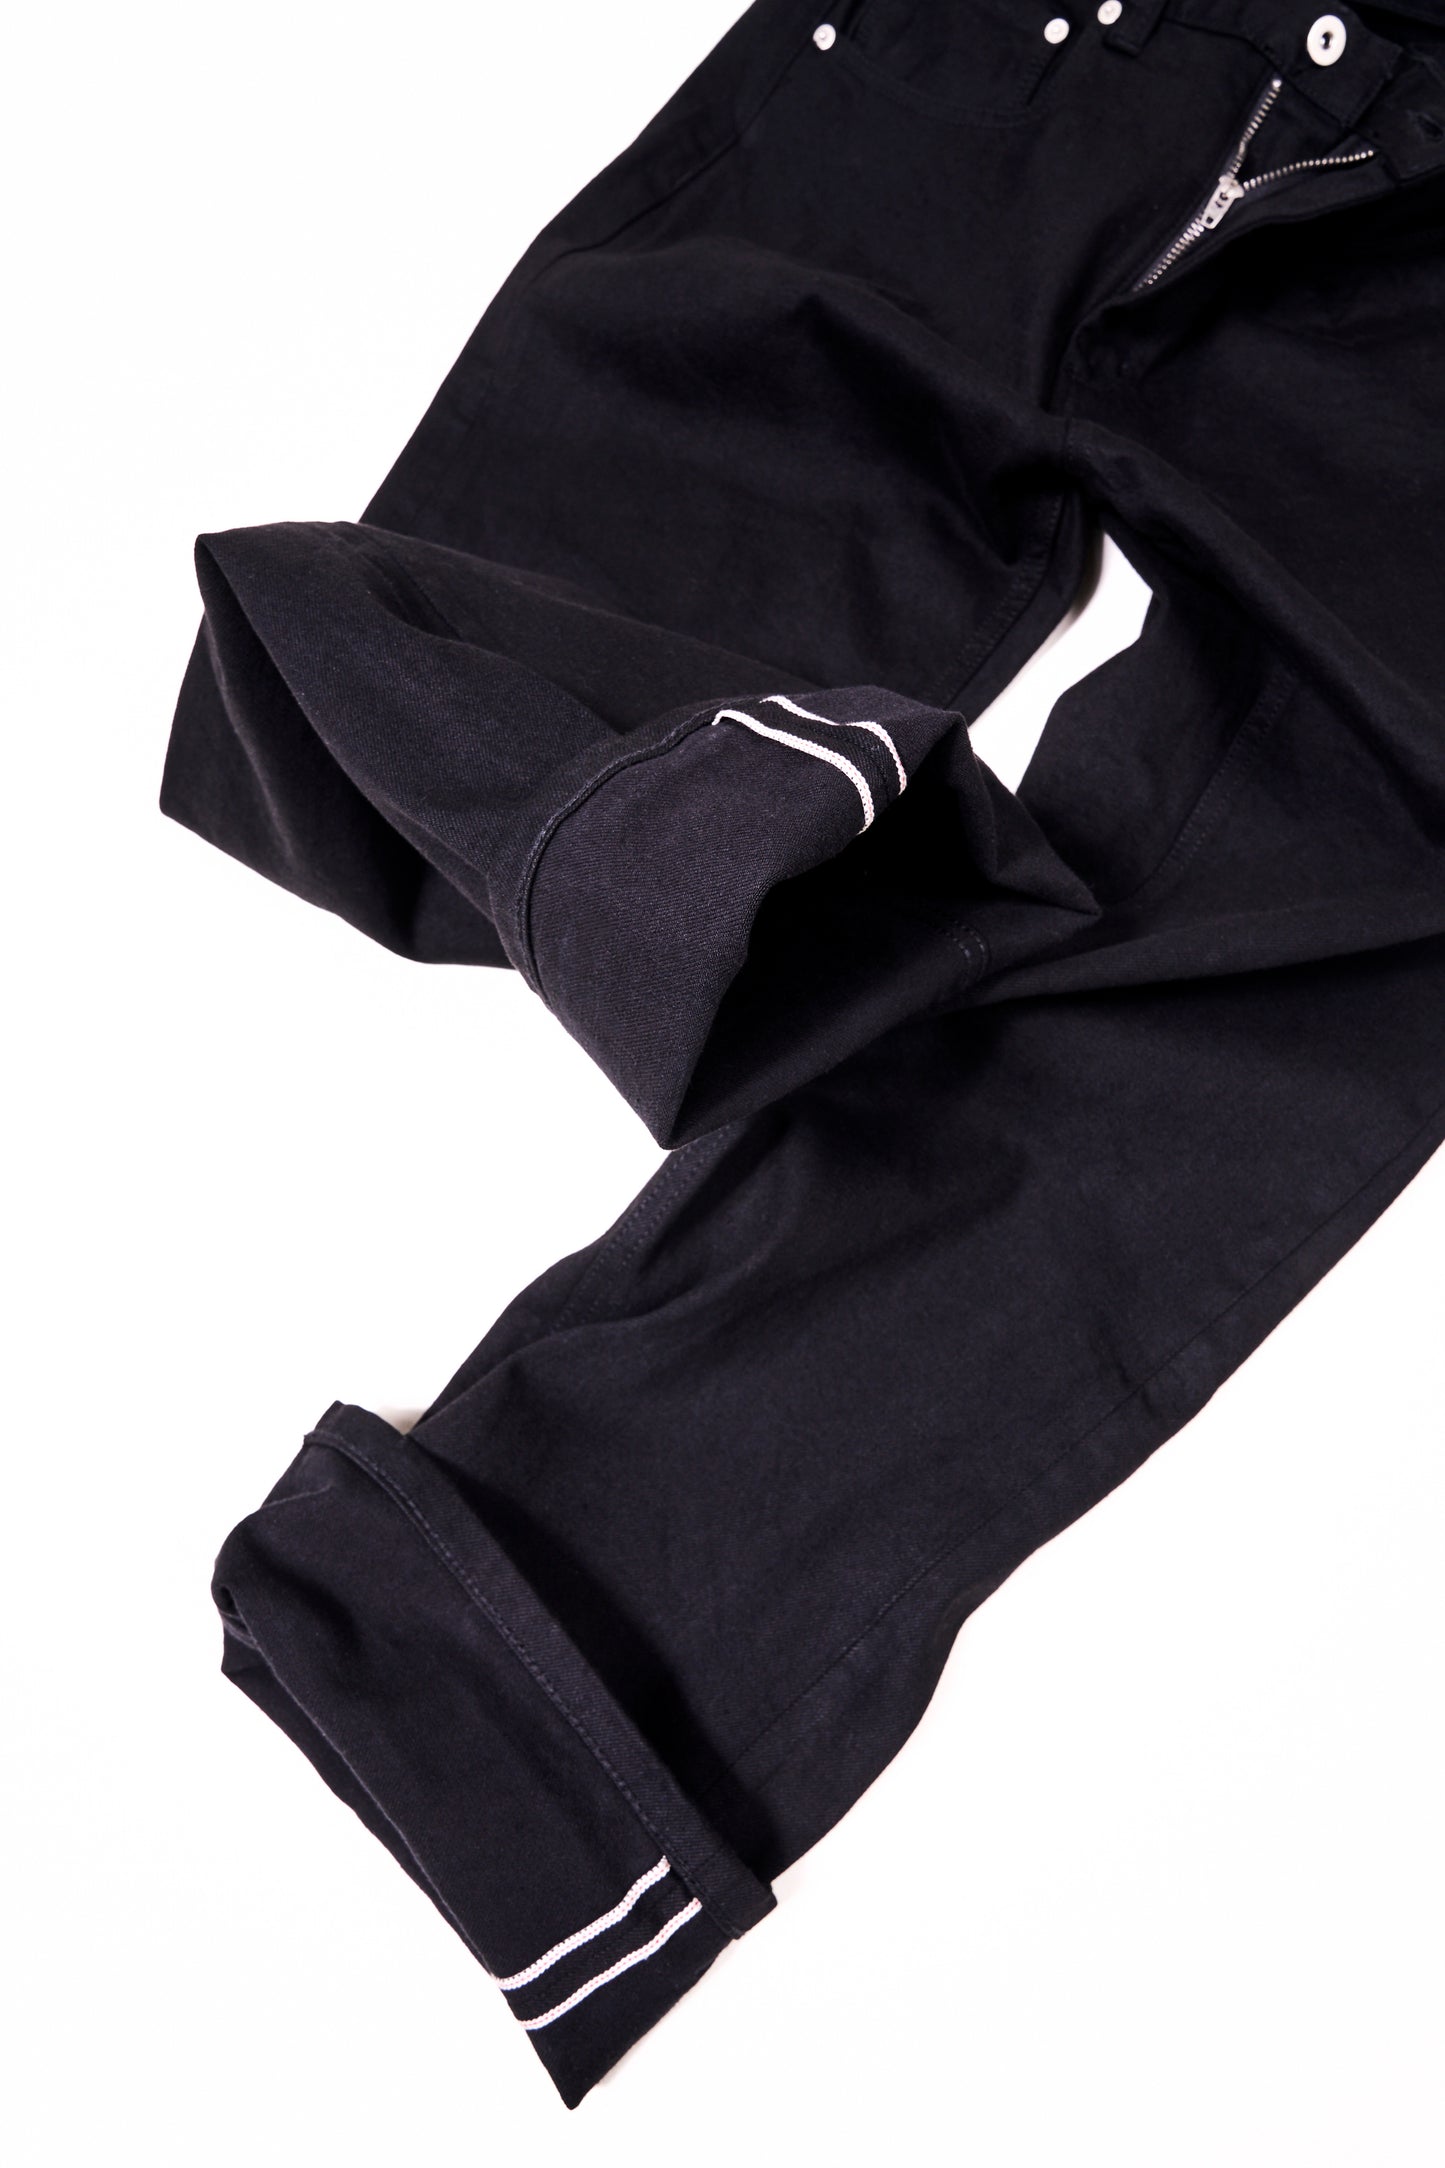 13oz. Selvage 1940s High Waist Black Jeans